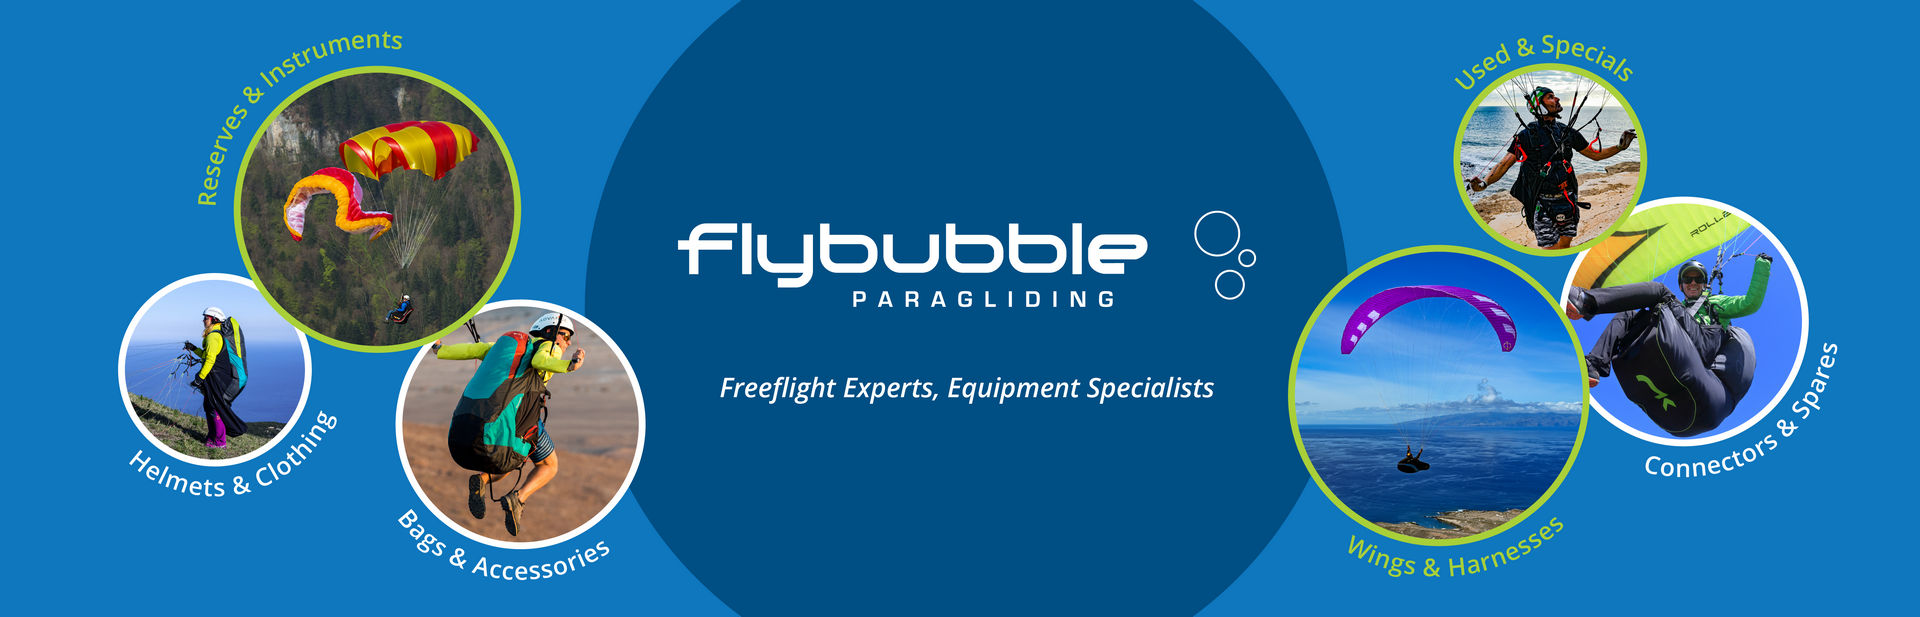 Flybubble Online Shop - Paragliding Free Flight Equipment Emporium